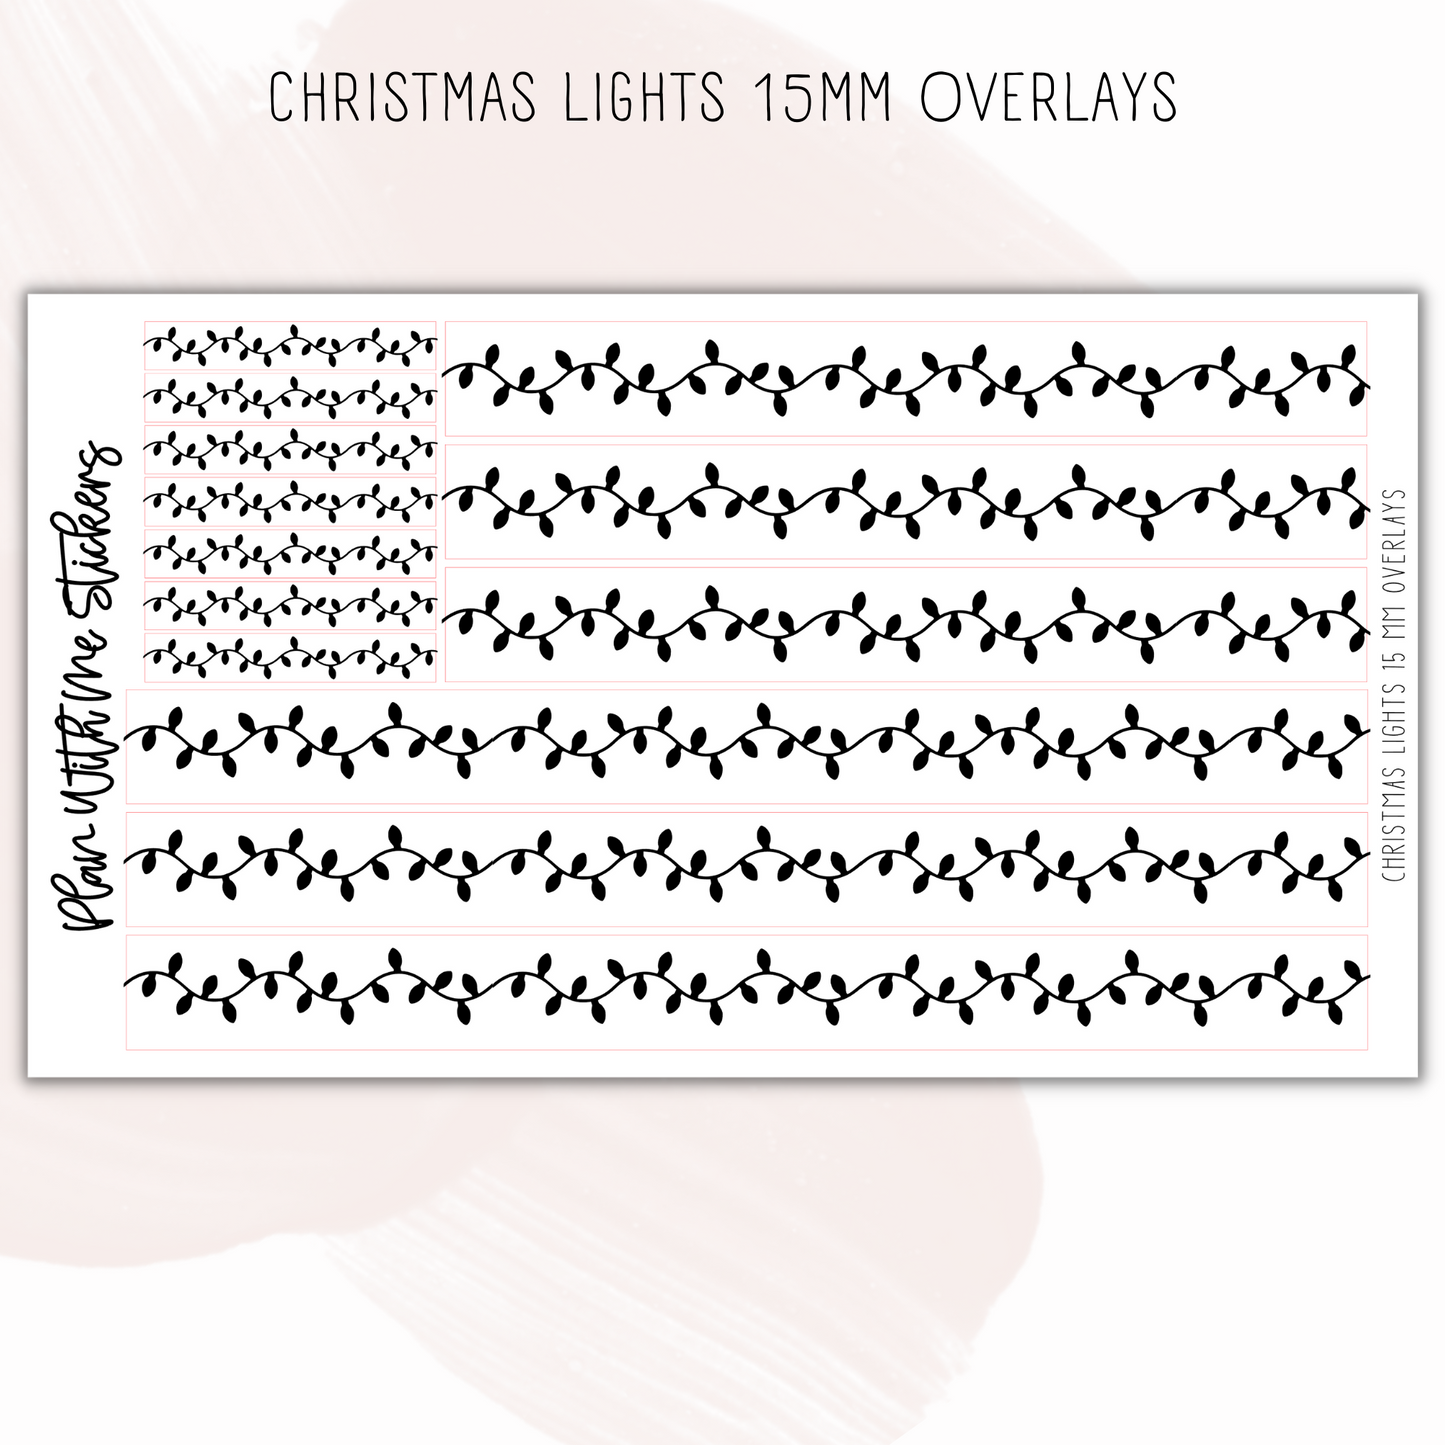 Christmas Lights 15mm Overlays